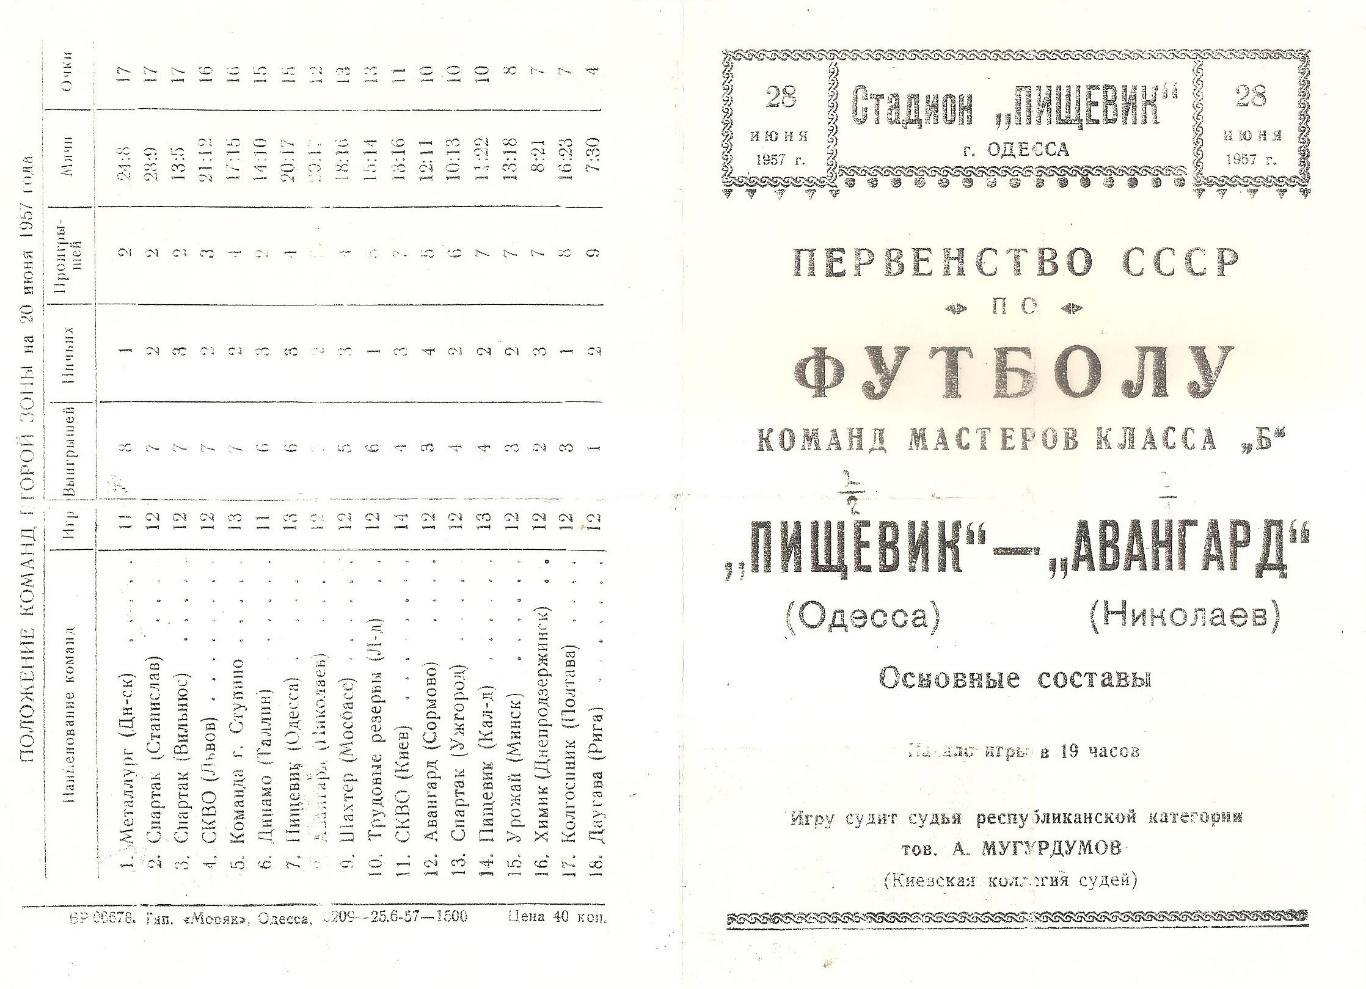 Пищевик Одесса - Авангард Николаев 28.06.1957г. (копия)